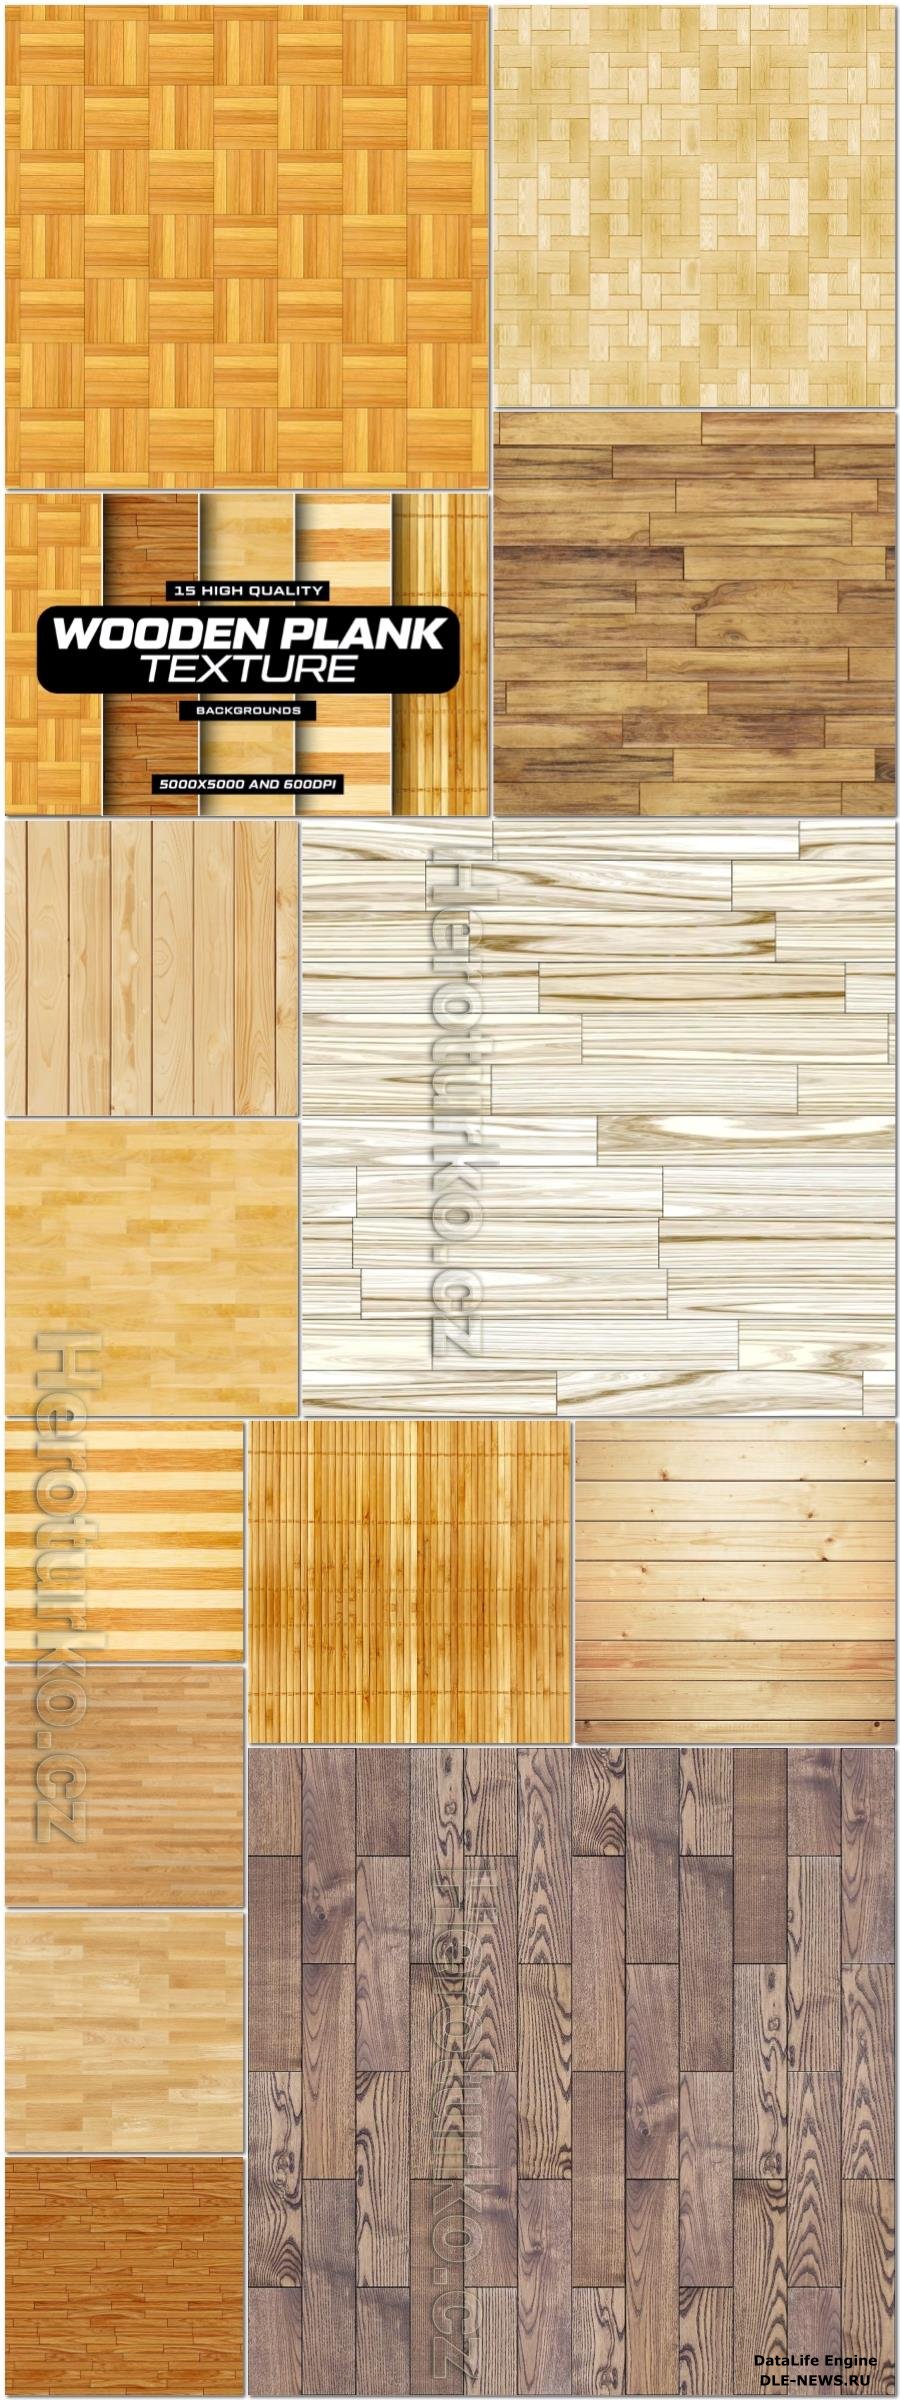 15 Wooden Plank Texture Design